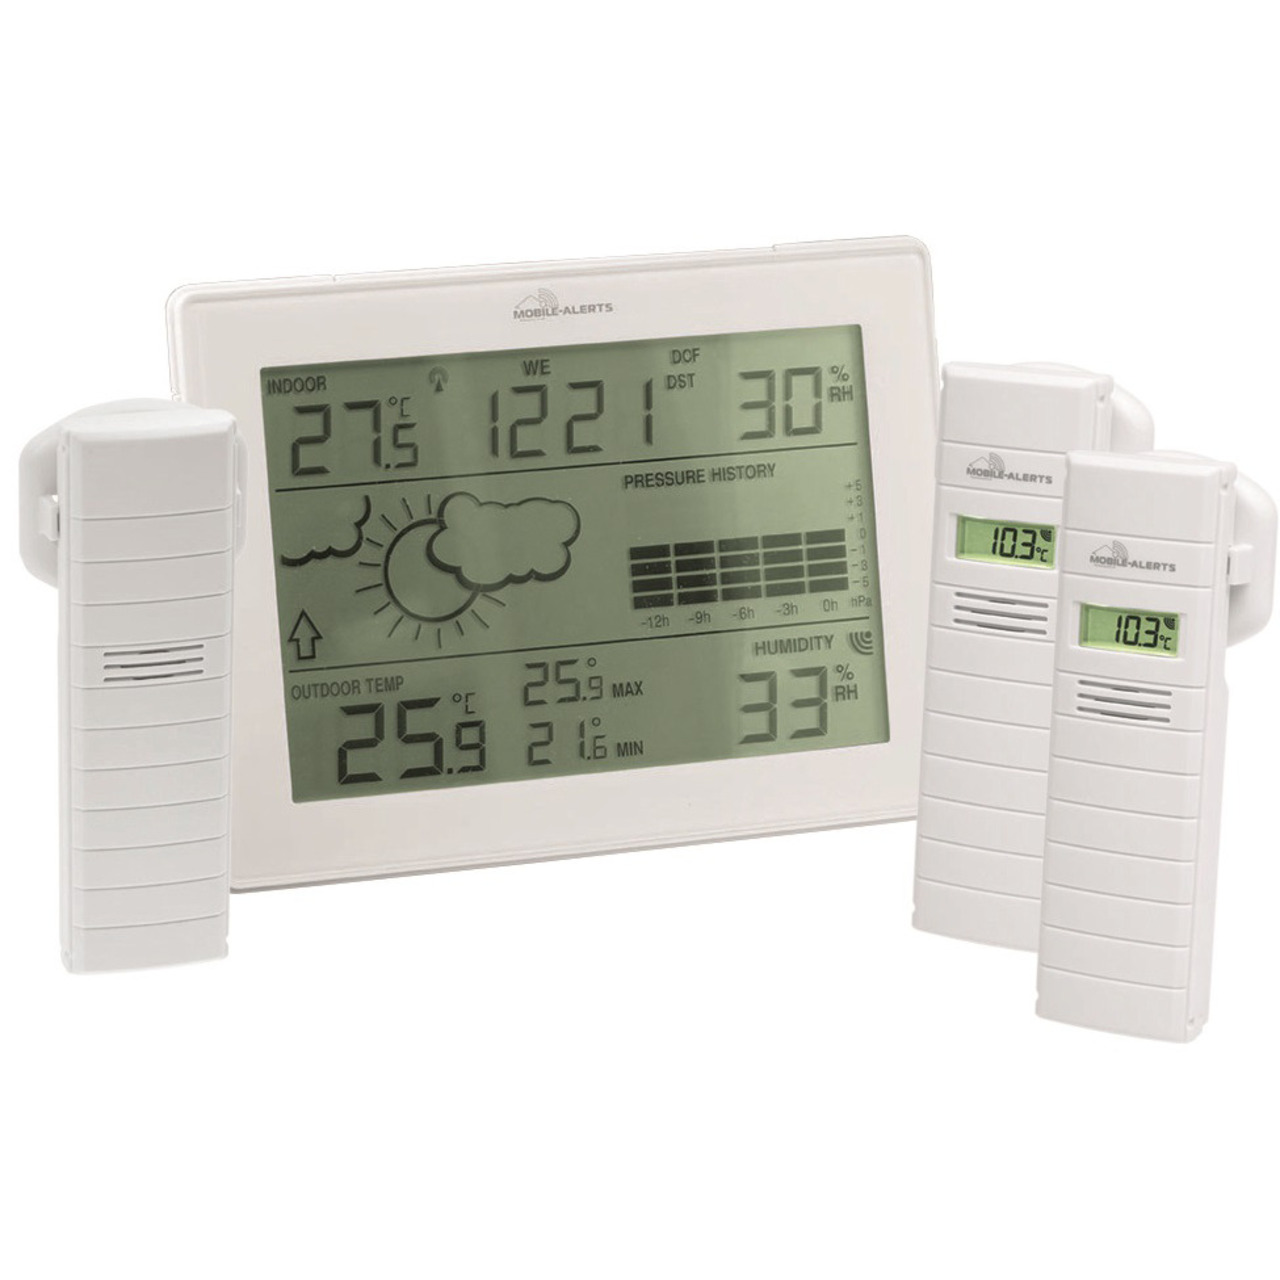 Mobile Alerts Zusatzsensoren-Spar-Set: Wetterstation MA10410- inkl- 3x Thermo-Hygrosensor